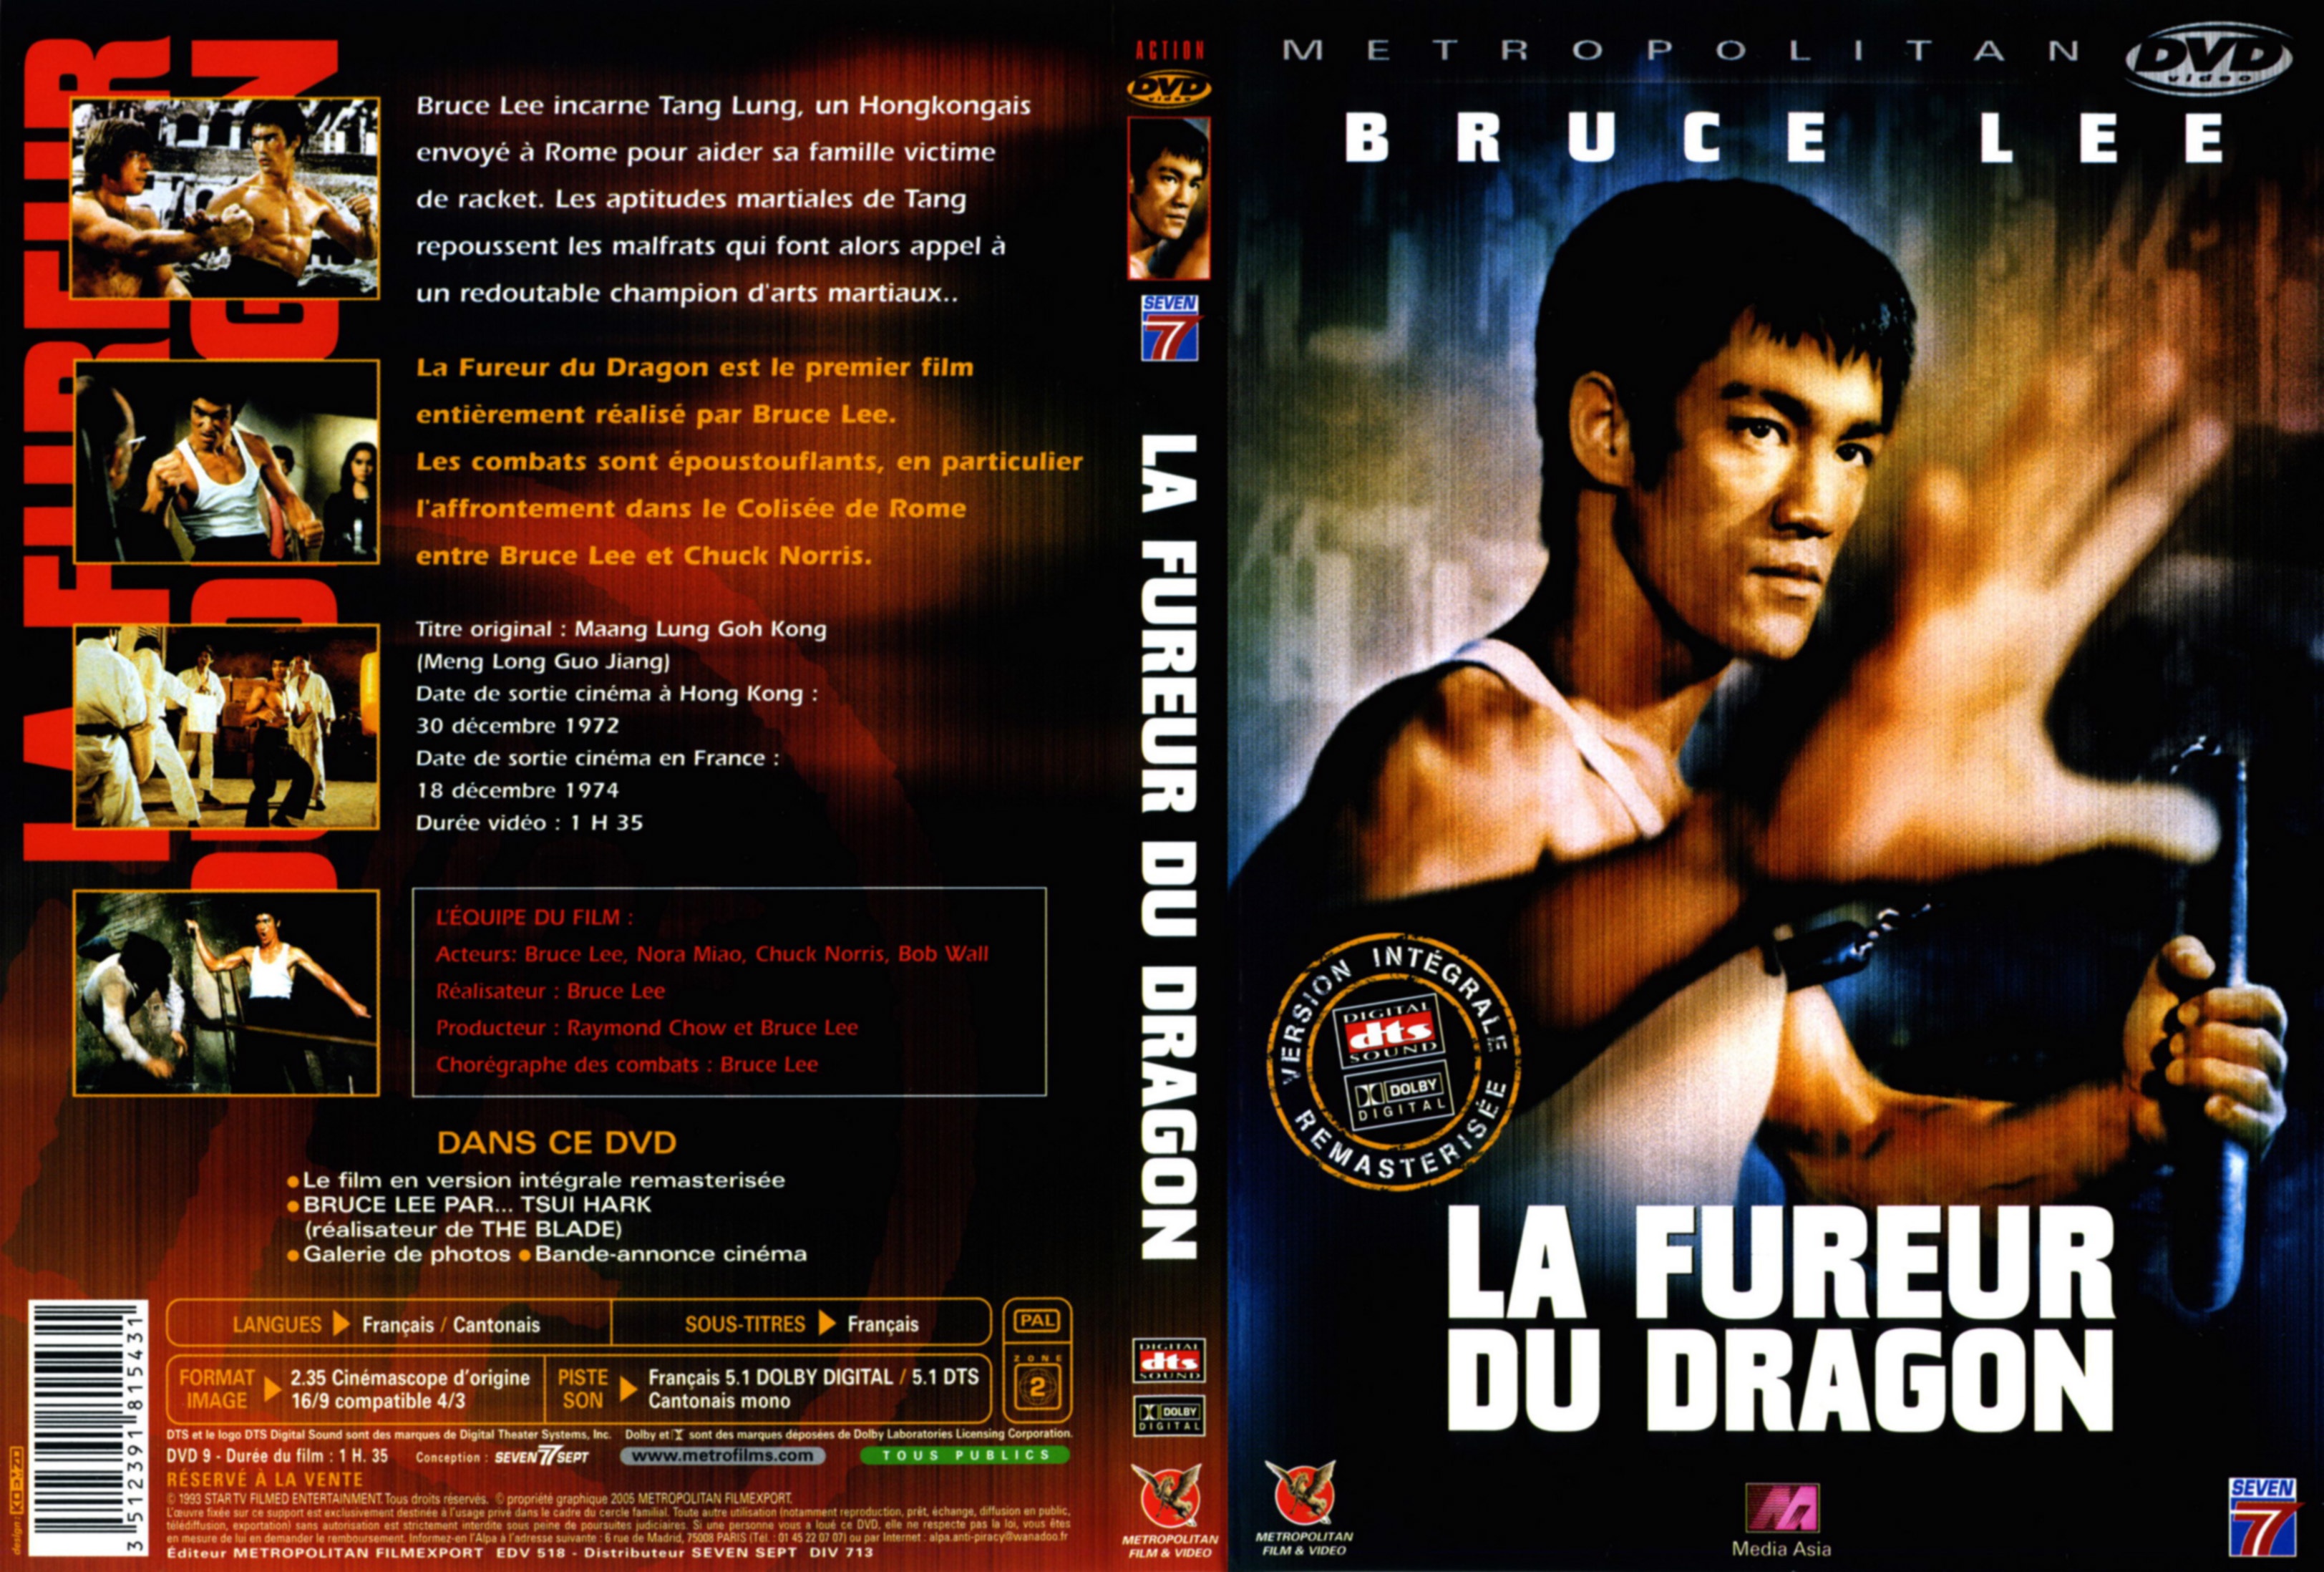 Jaquette DVD La fureur du dragon v3